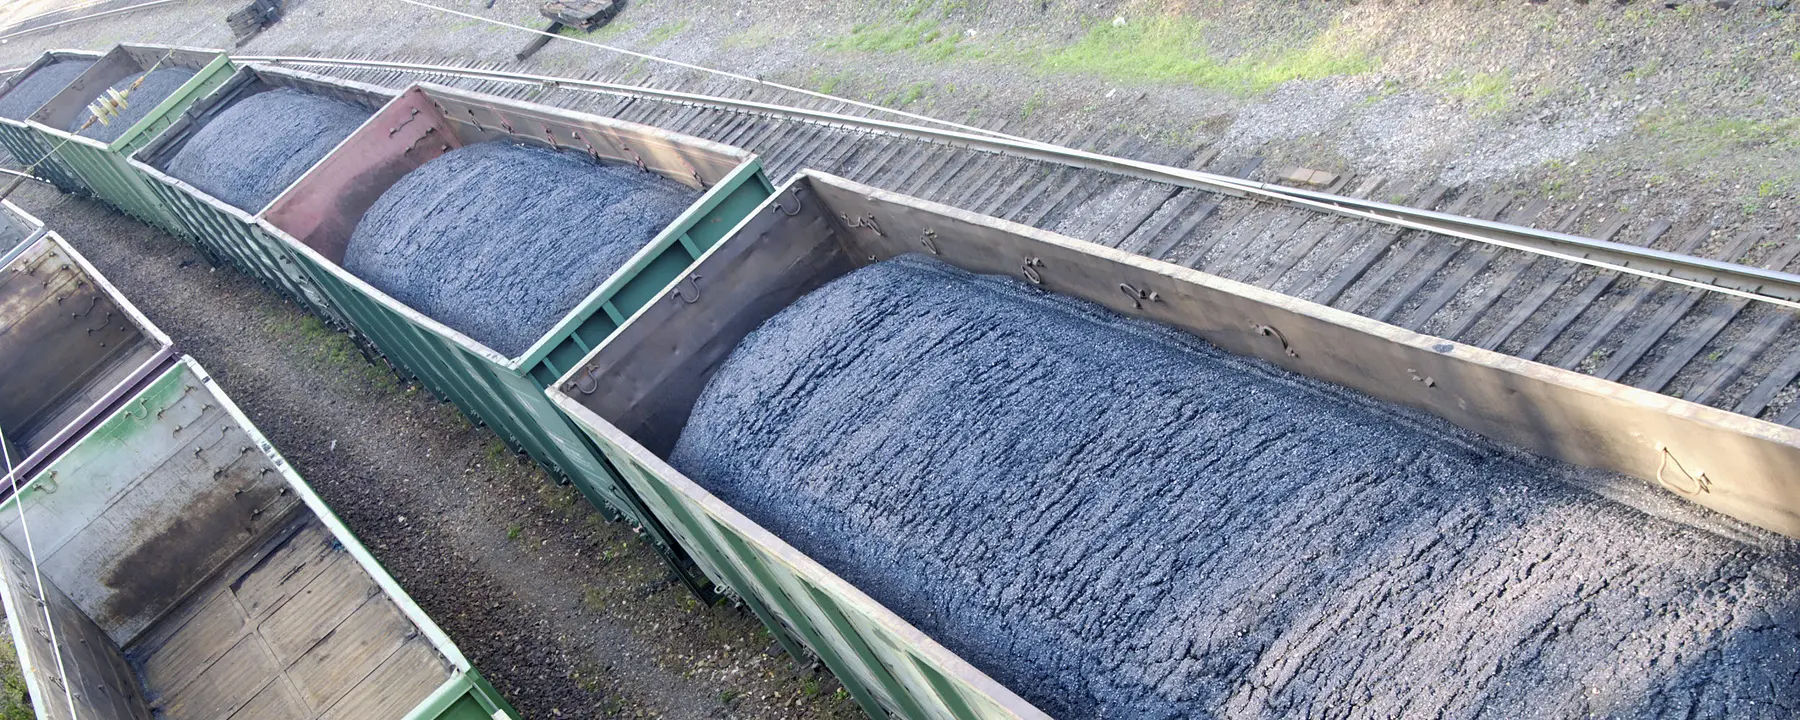 A train carries loads of coal